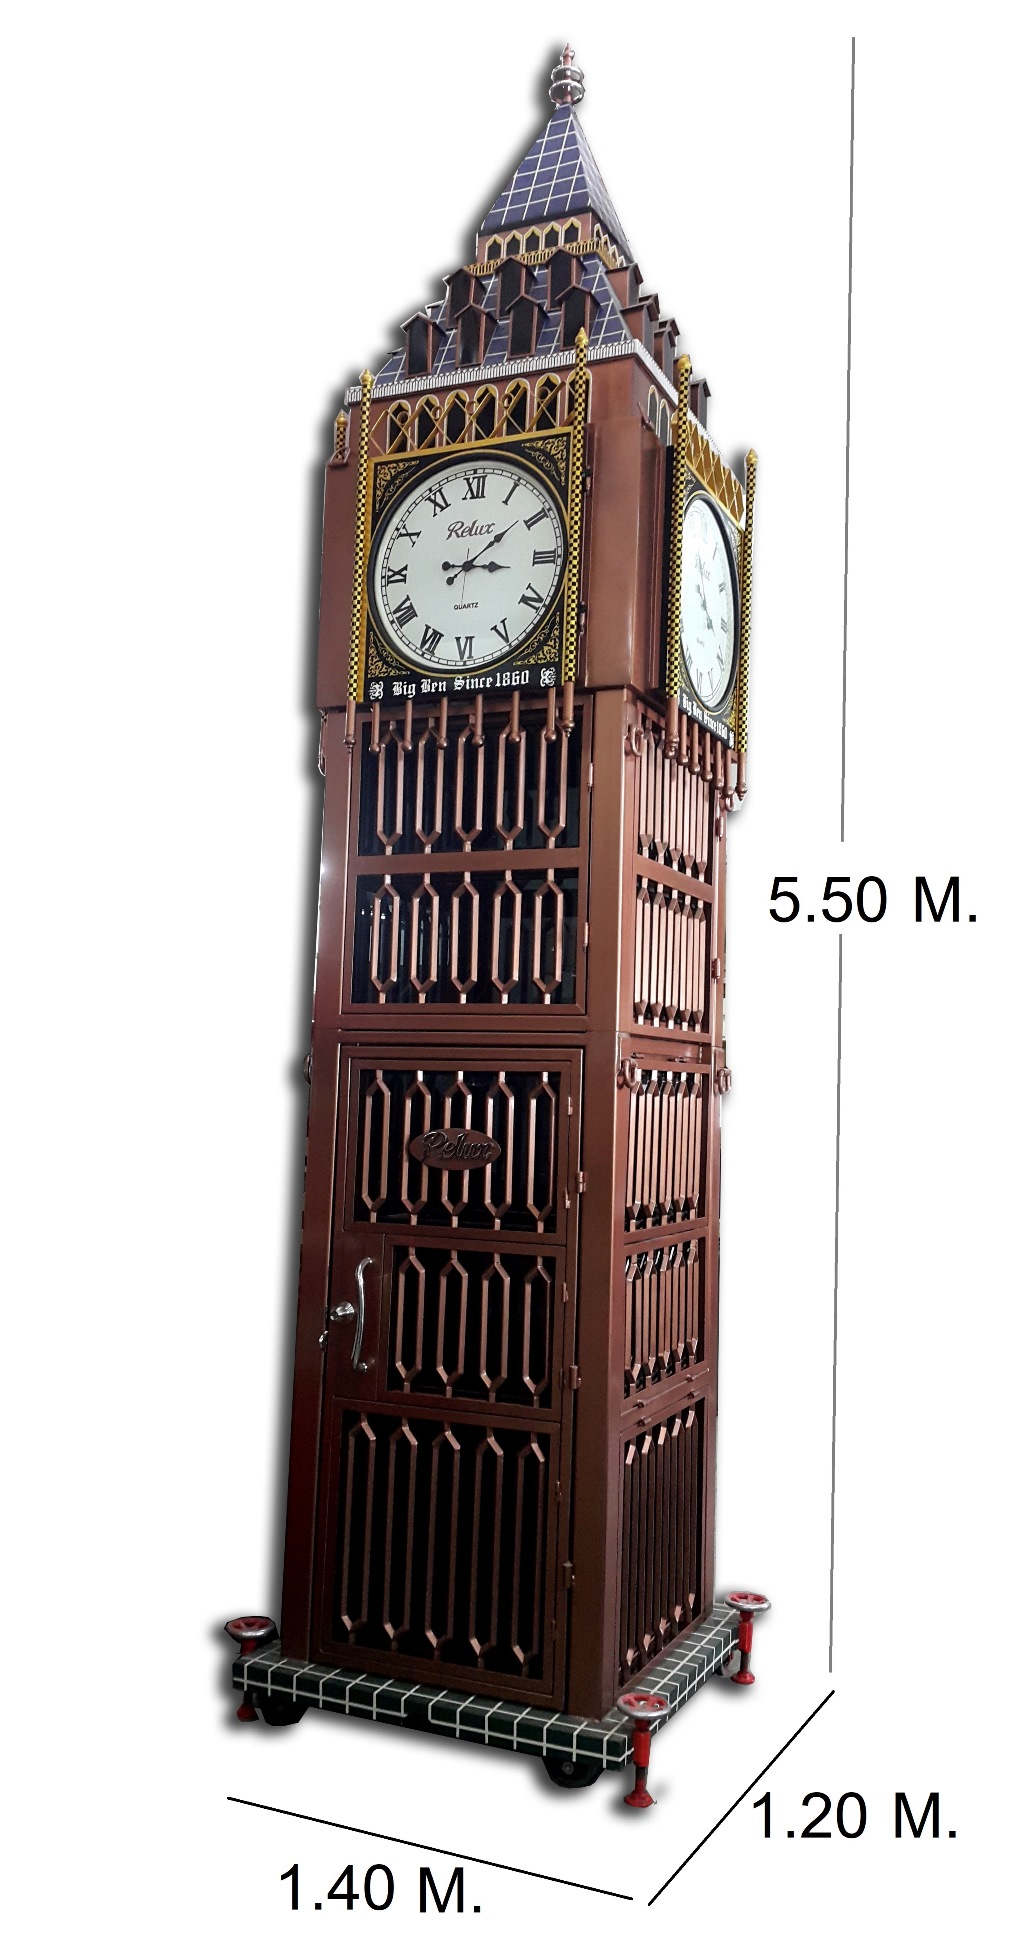 Relux คีย์ออส หอนาฬิกาบิกเบน Big Ben Since 1860 *สต็อกราคาพิเศษ ดัดแปลงไม่ได้*